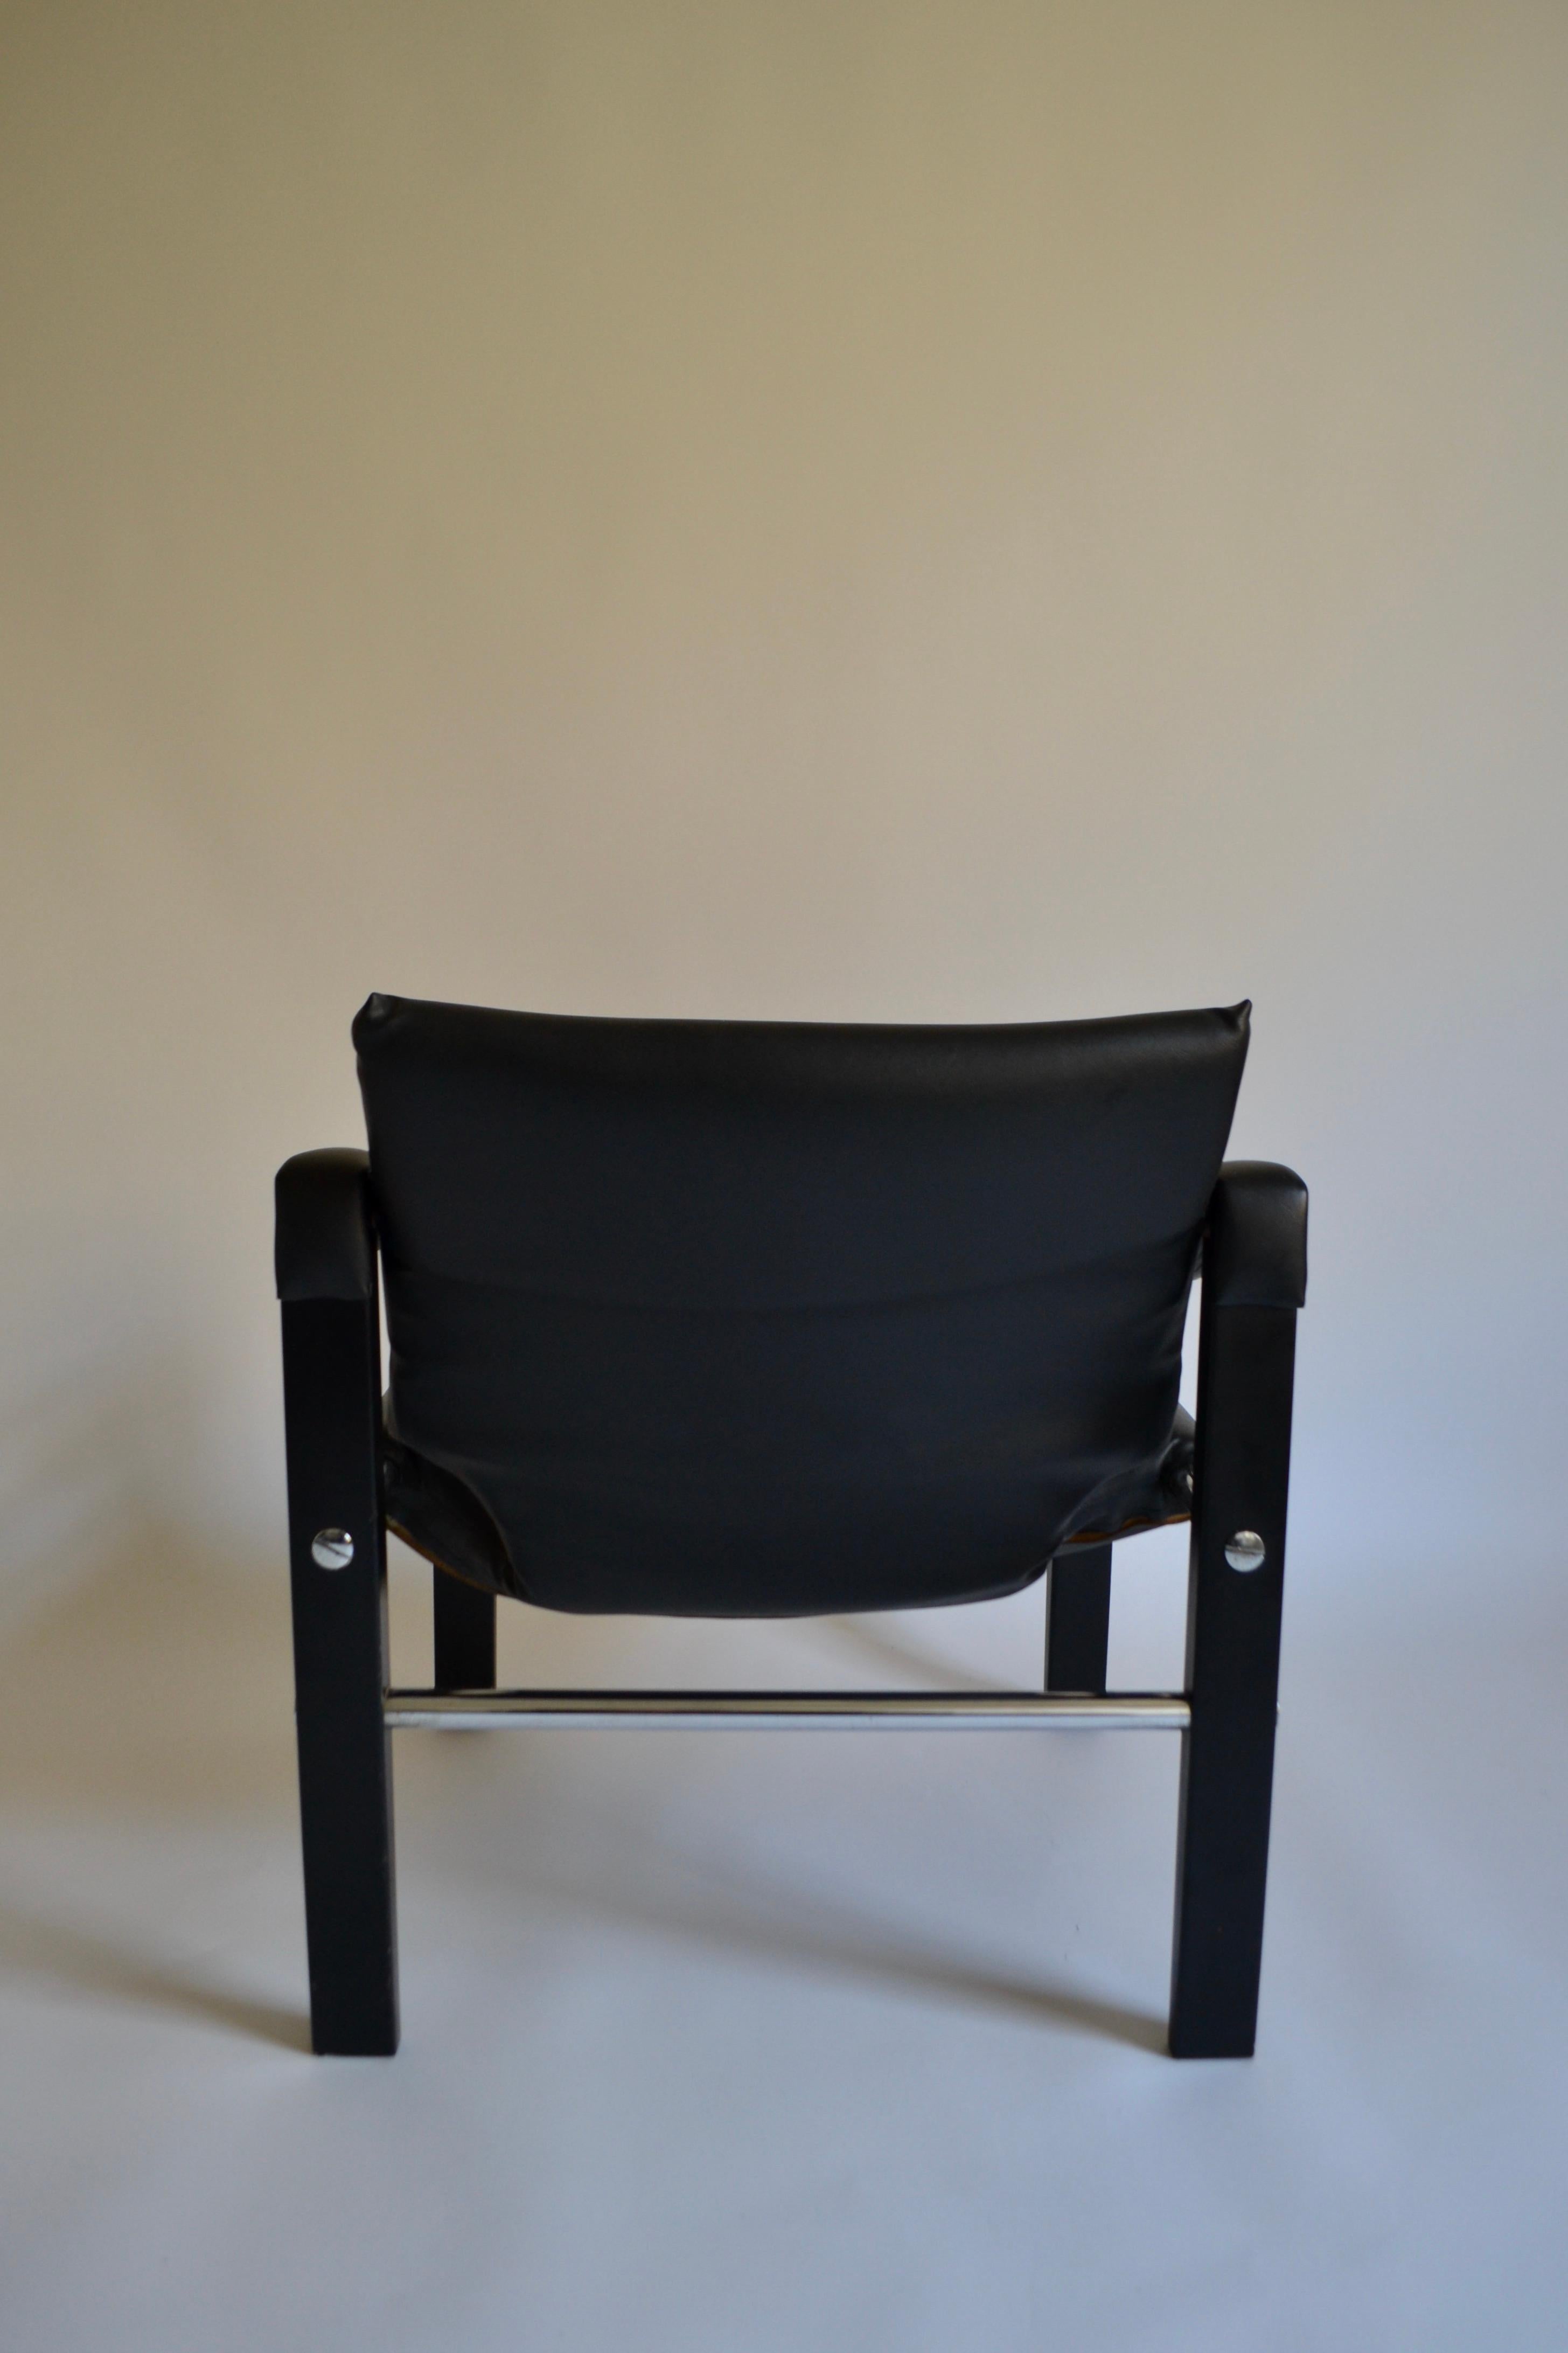 Late 20th Century Black Vinyl Safari Chair by Maurice Burke for Arkana, 1980s